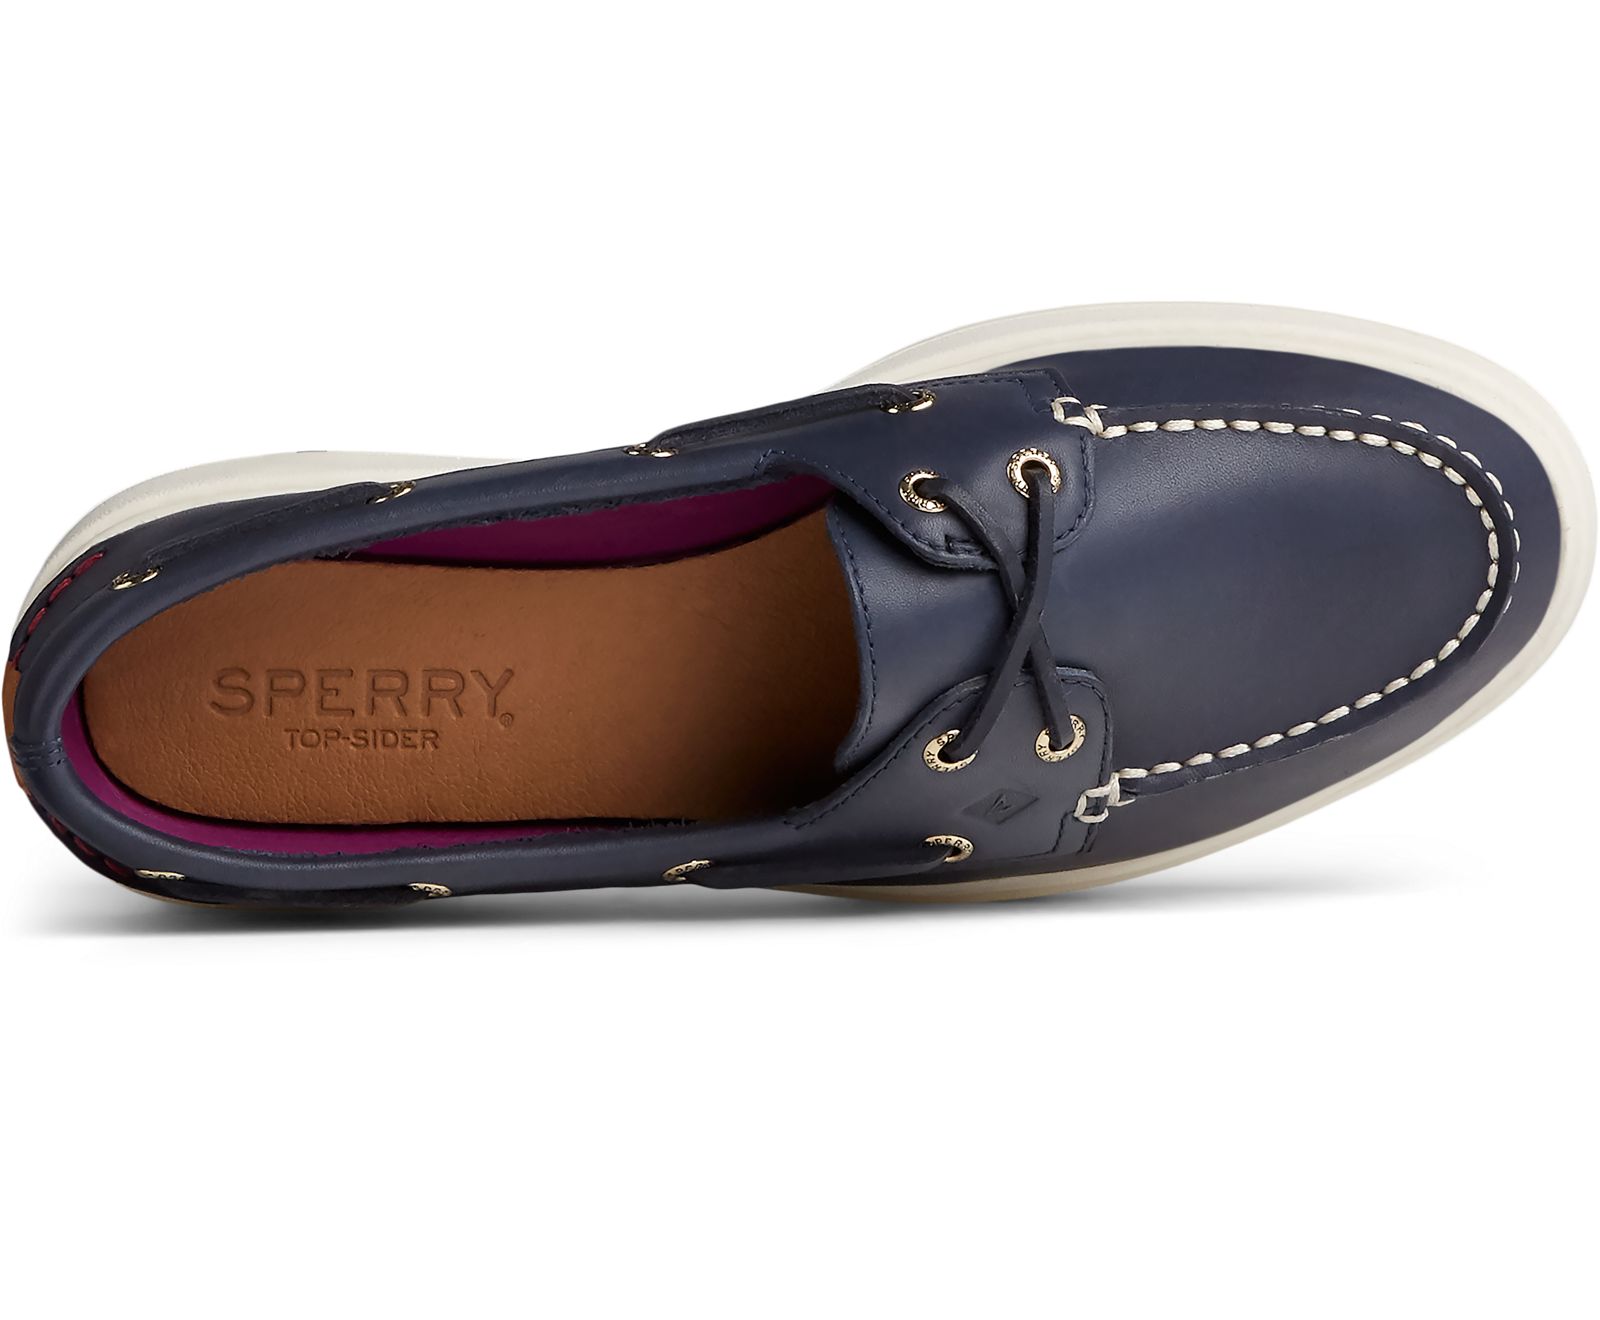 Women's Authentic Original Platform Leather Boat Shoe - Boat Shoes | Sperry